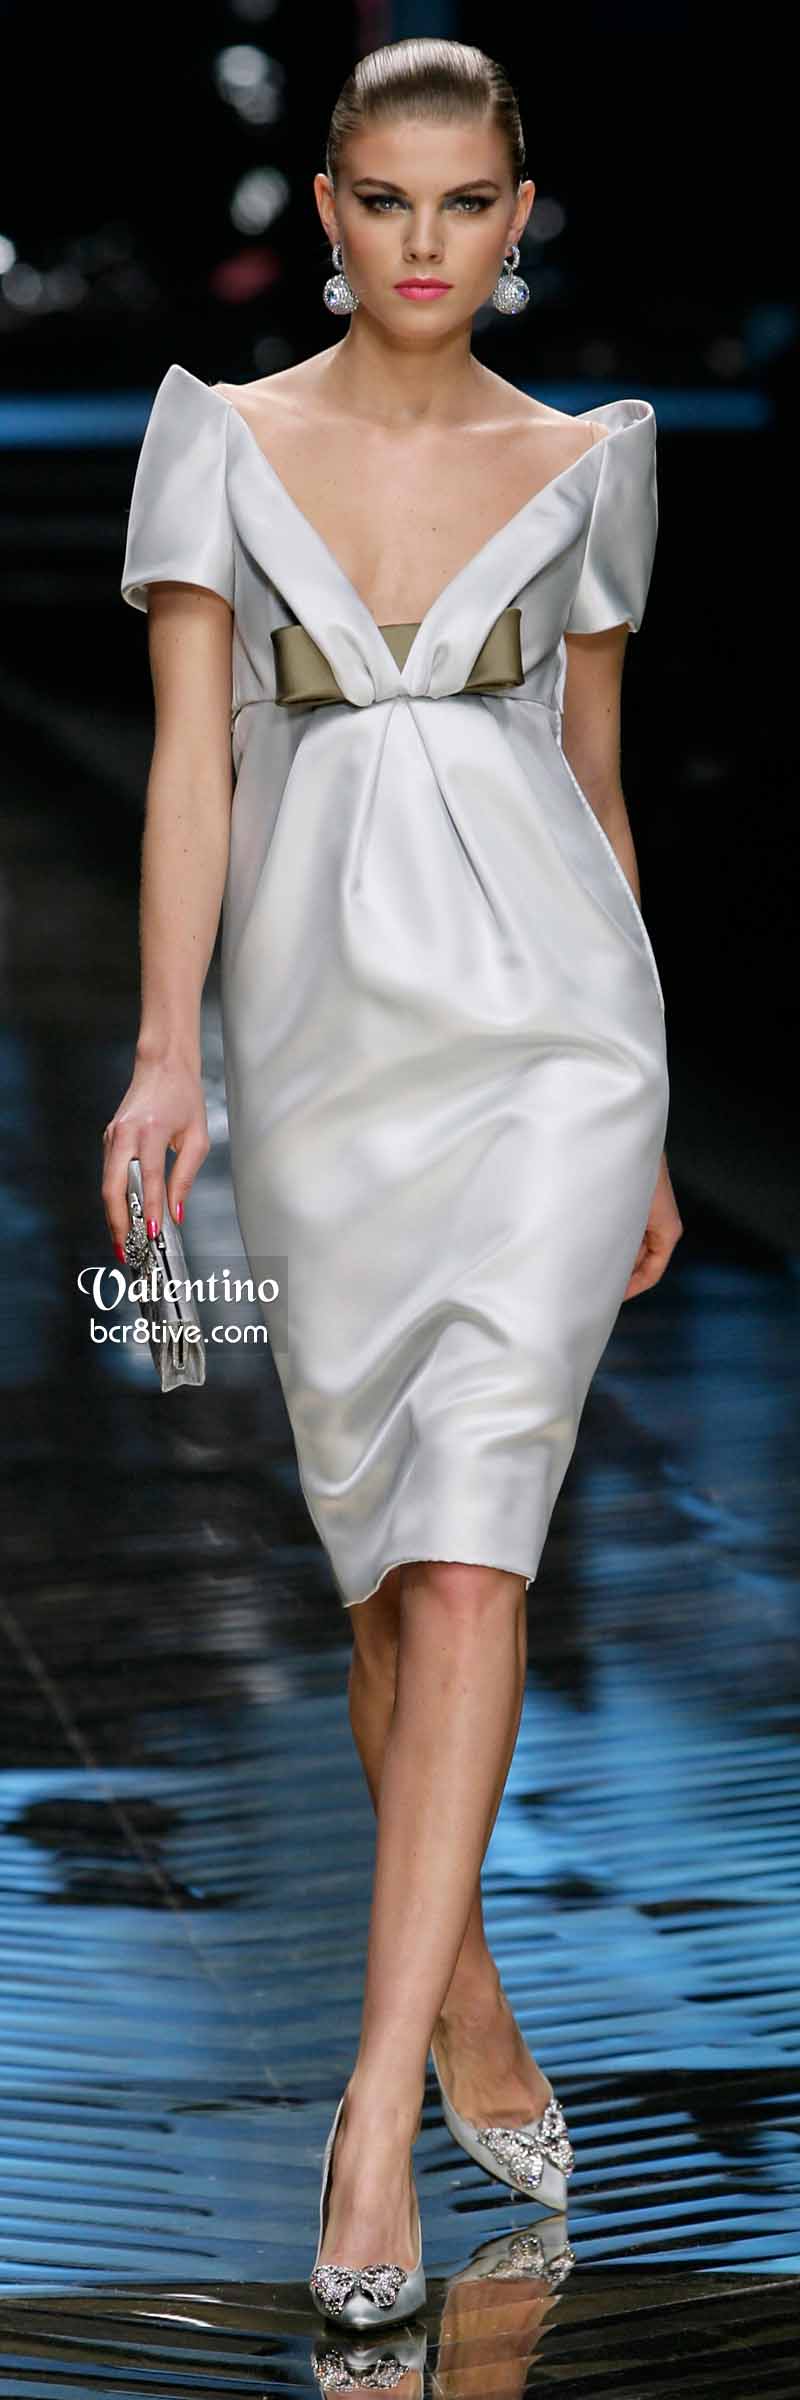 Valentino Charming Formal White Cocktail Dress